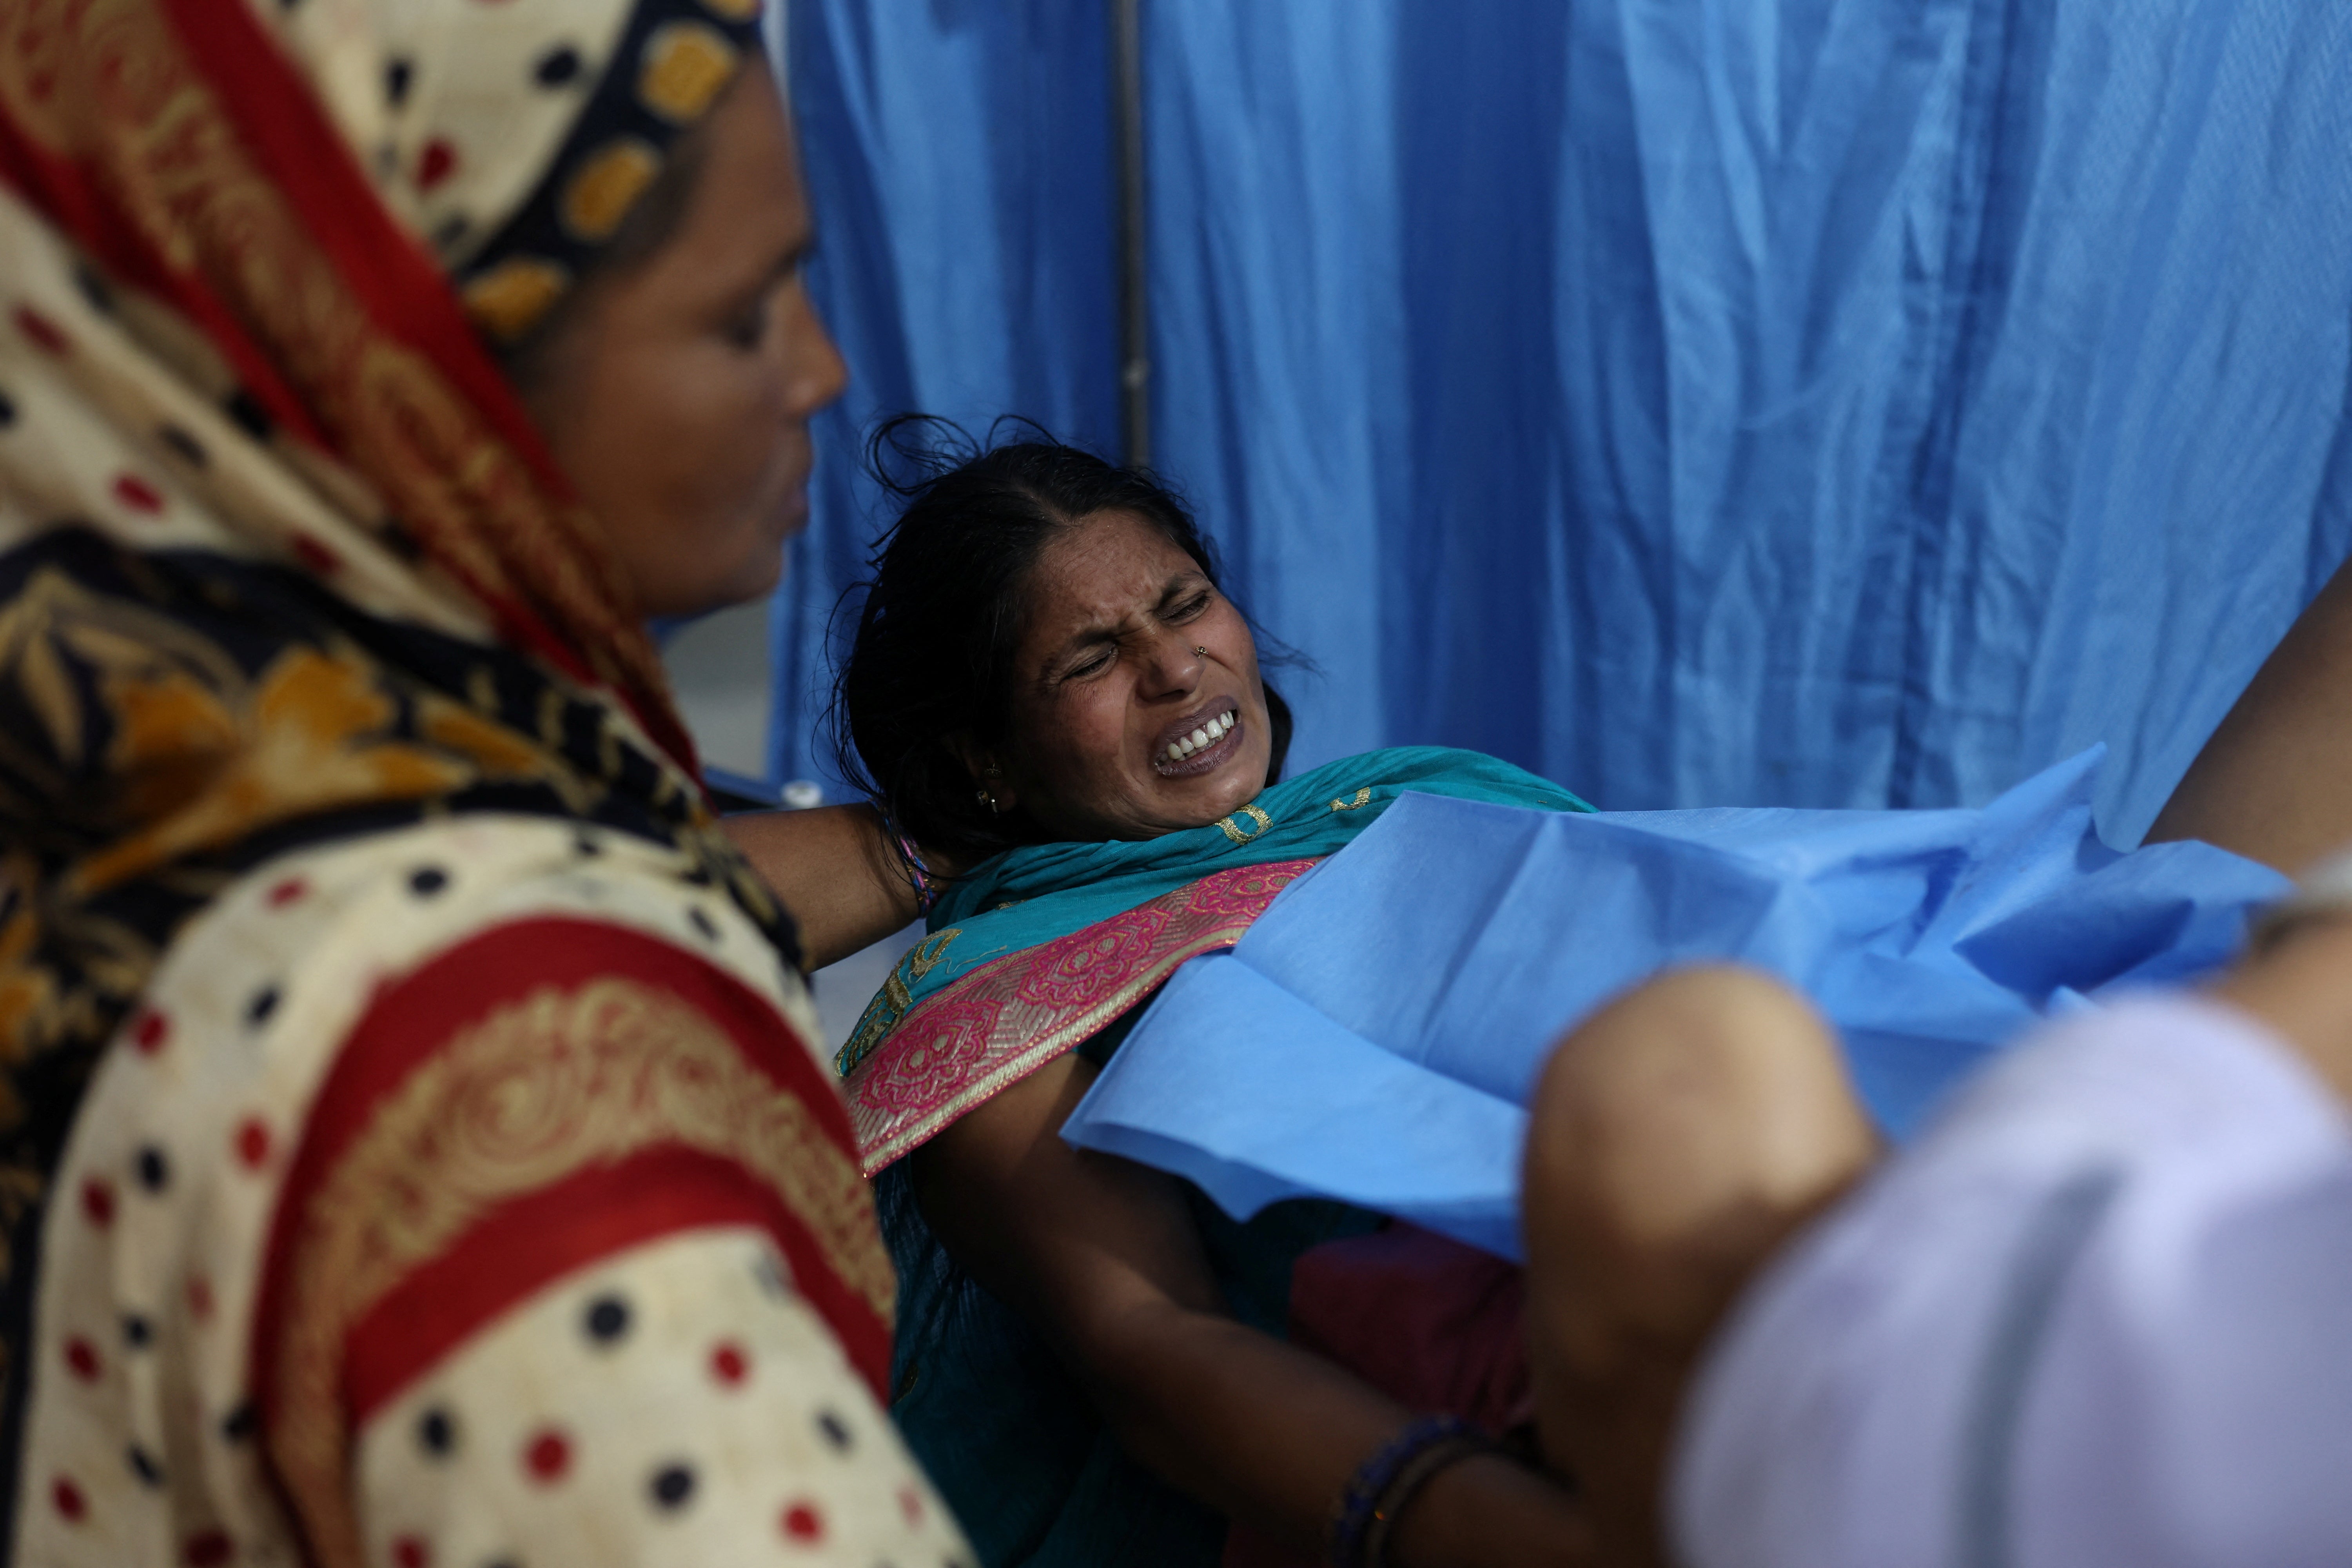 Zamerun Nisha gives birth to her fifth child on the labour ward